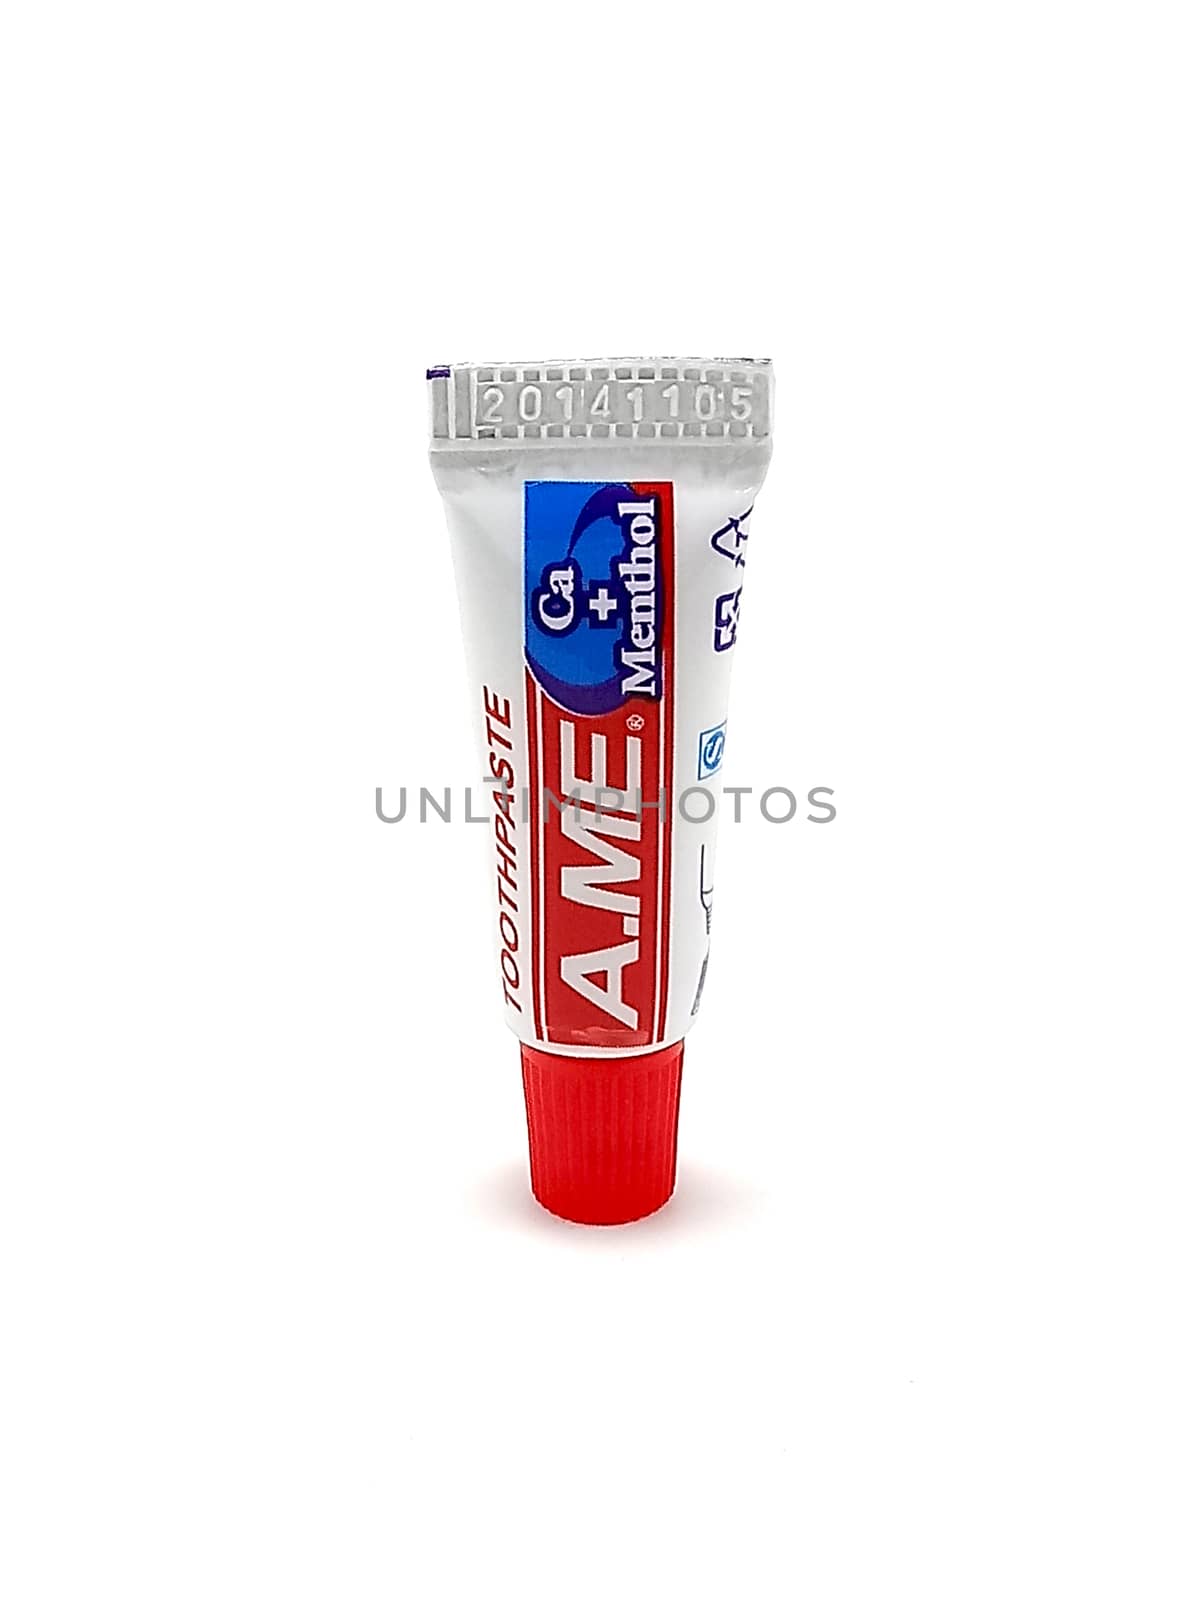 MANILA, PH - JUNE 23 - Ame toothpaste tube on June 23, 2020 in Manila, Philippines.